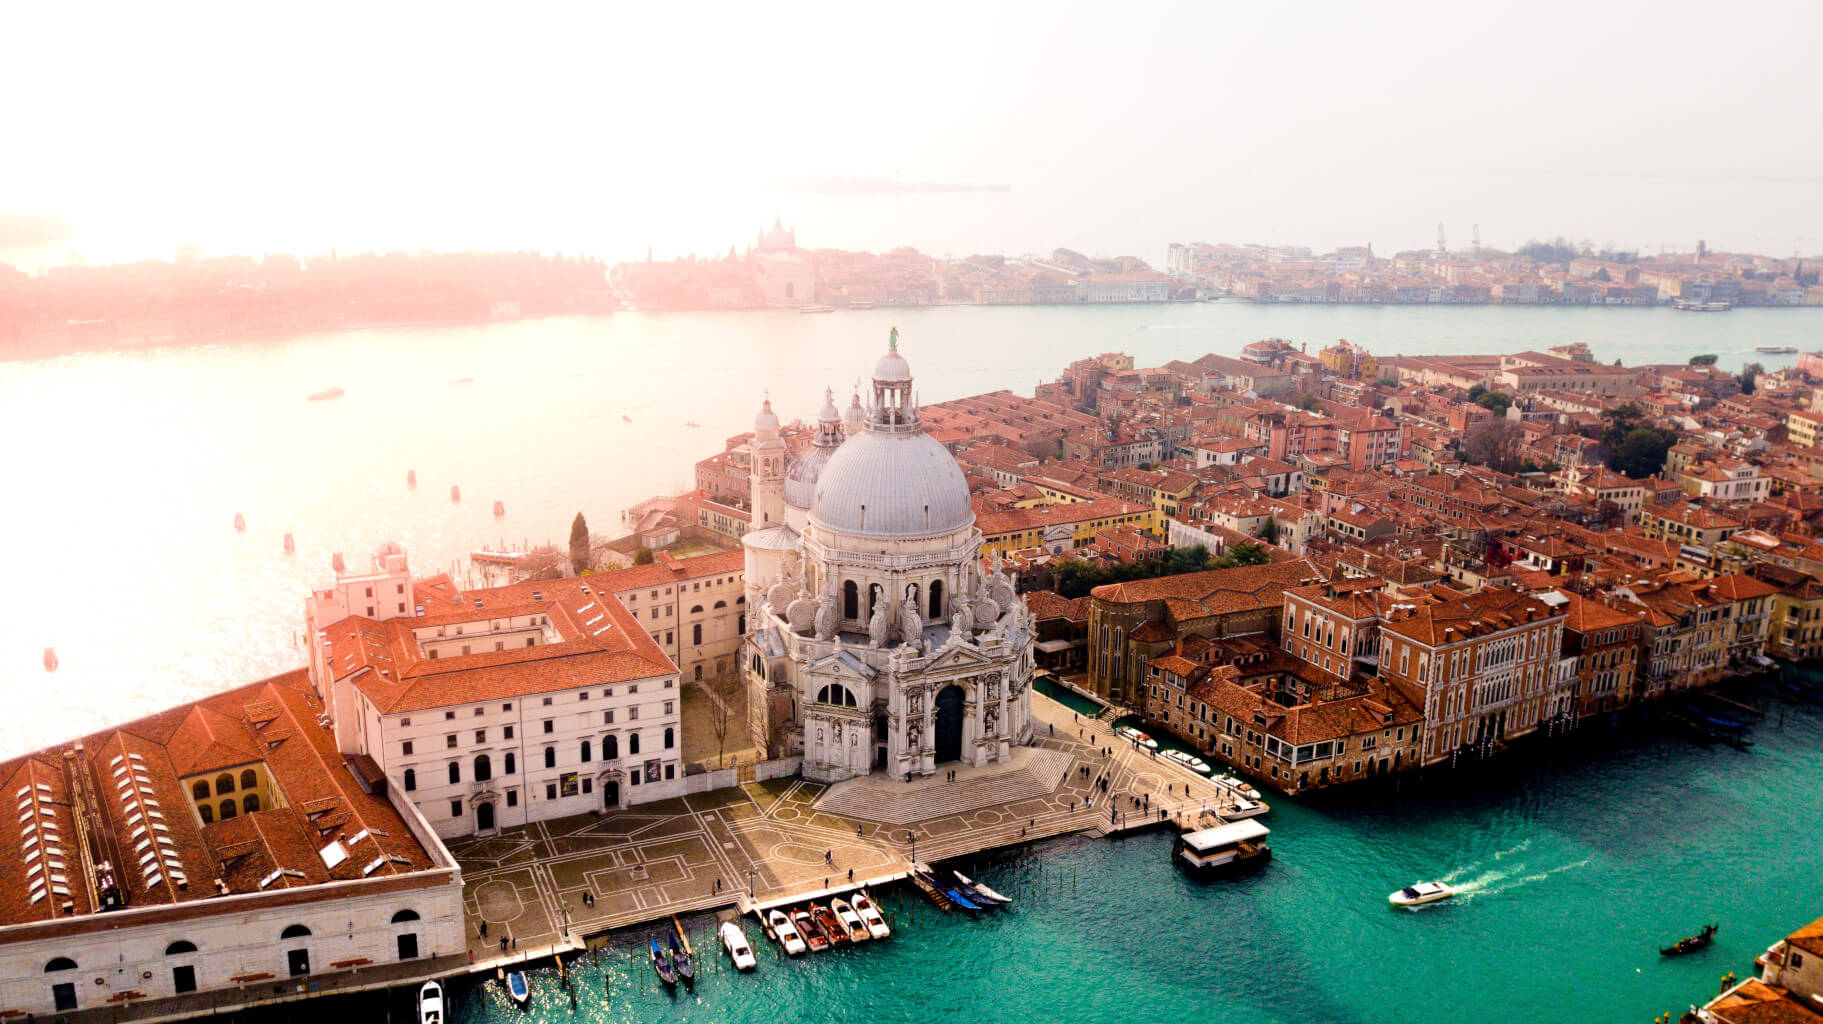 How to reach Venice from Lake Garda